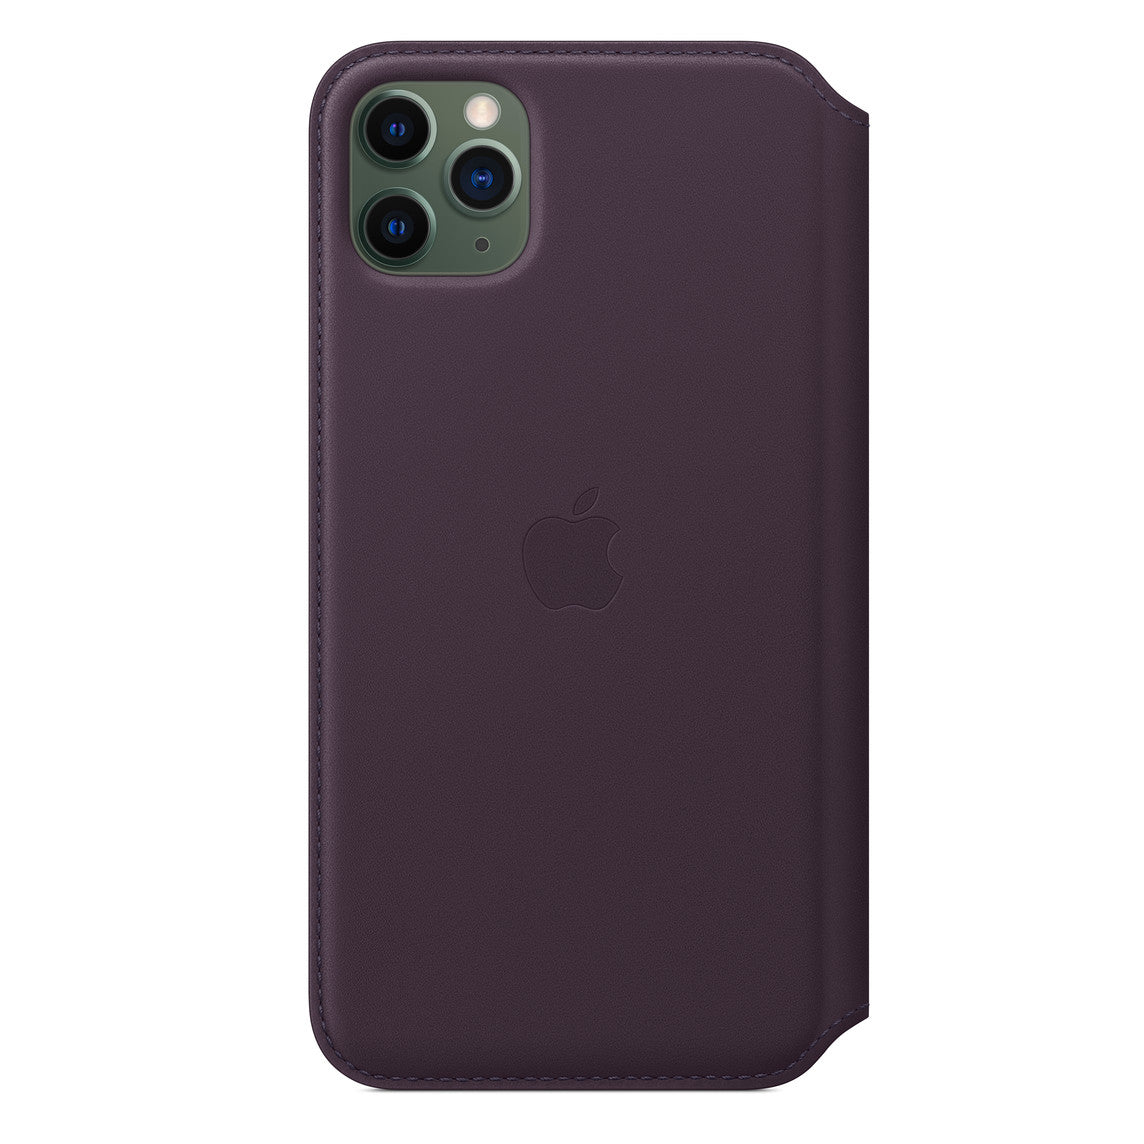 Apple iPhone 11 Pro Max 64GB Nachtgrün Sehr Gut Ohne Vertrag mit Apple iPhone 11 Pro Max Leder Folio - Aubergine